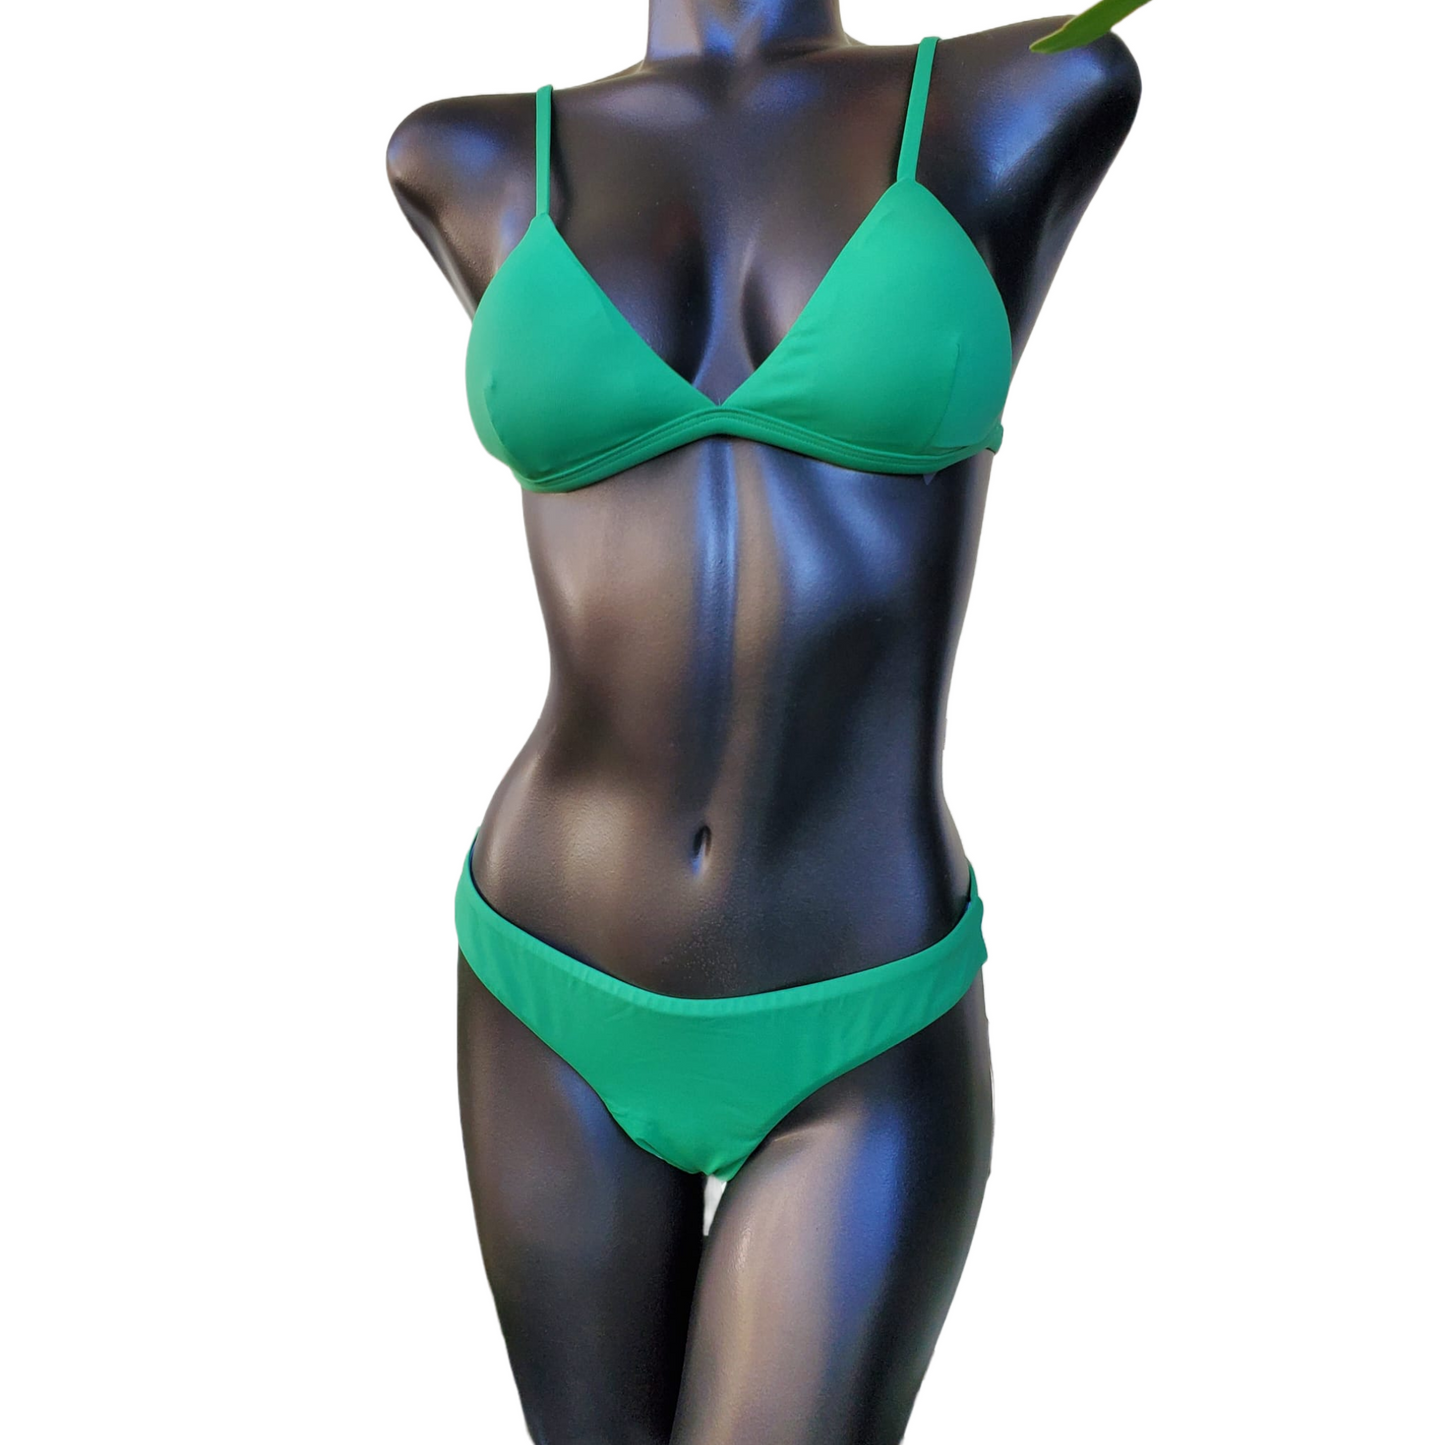 Forest Green seamless bottoms bikini set